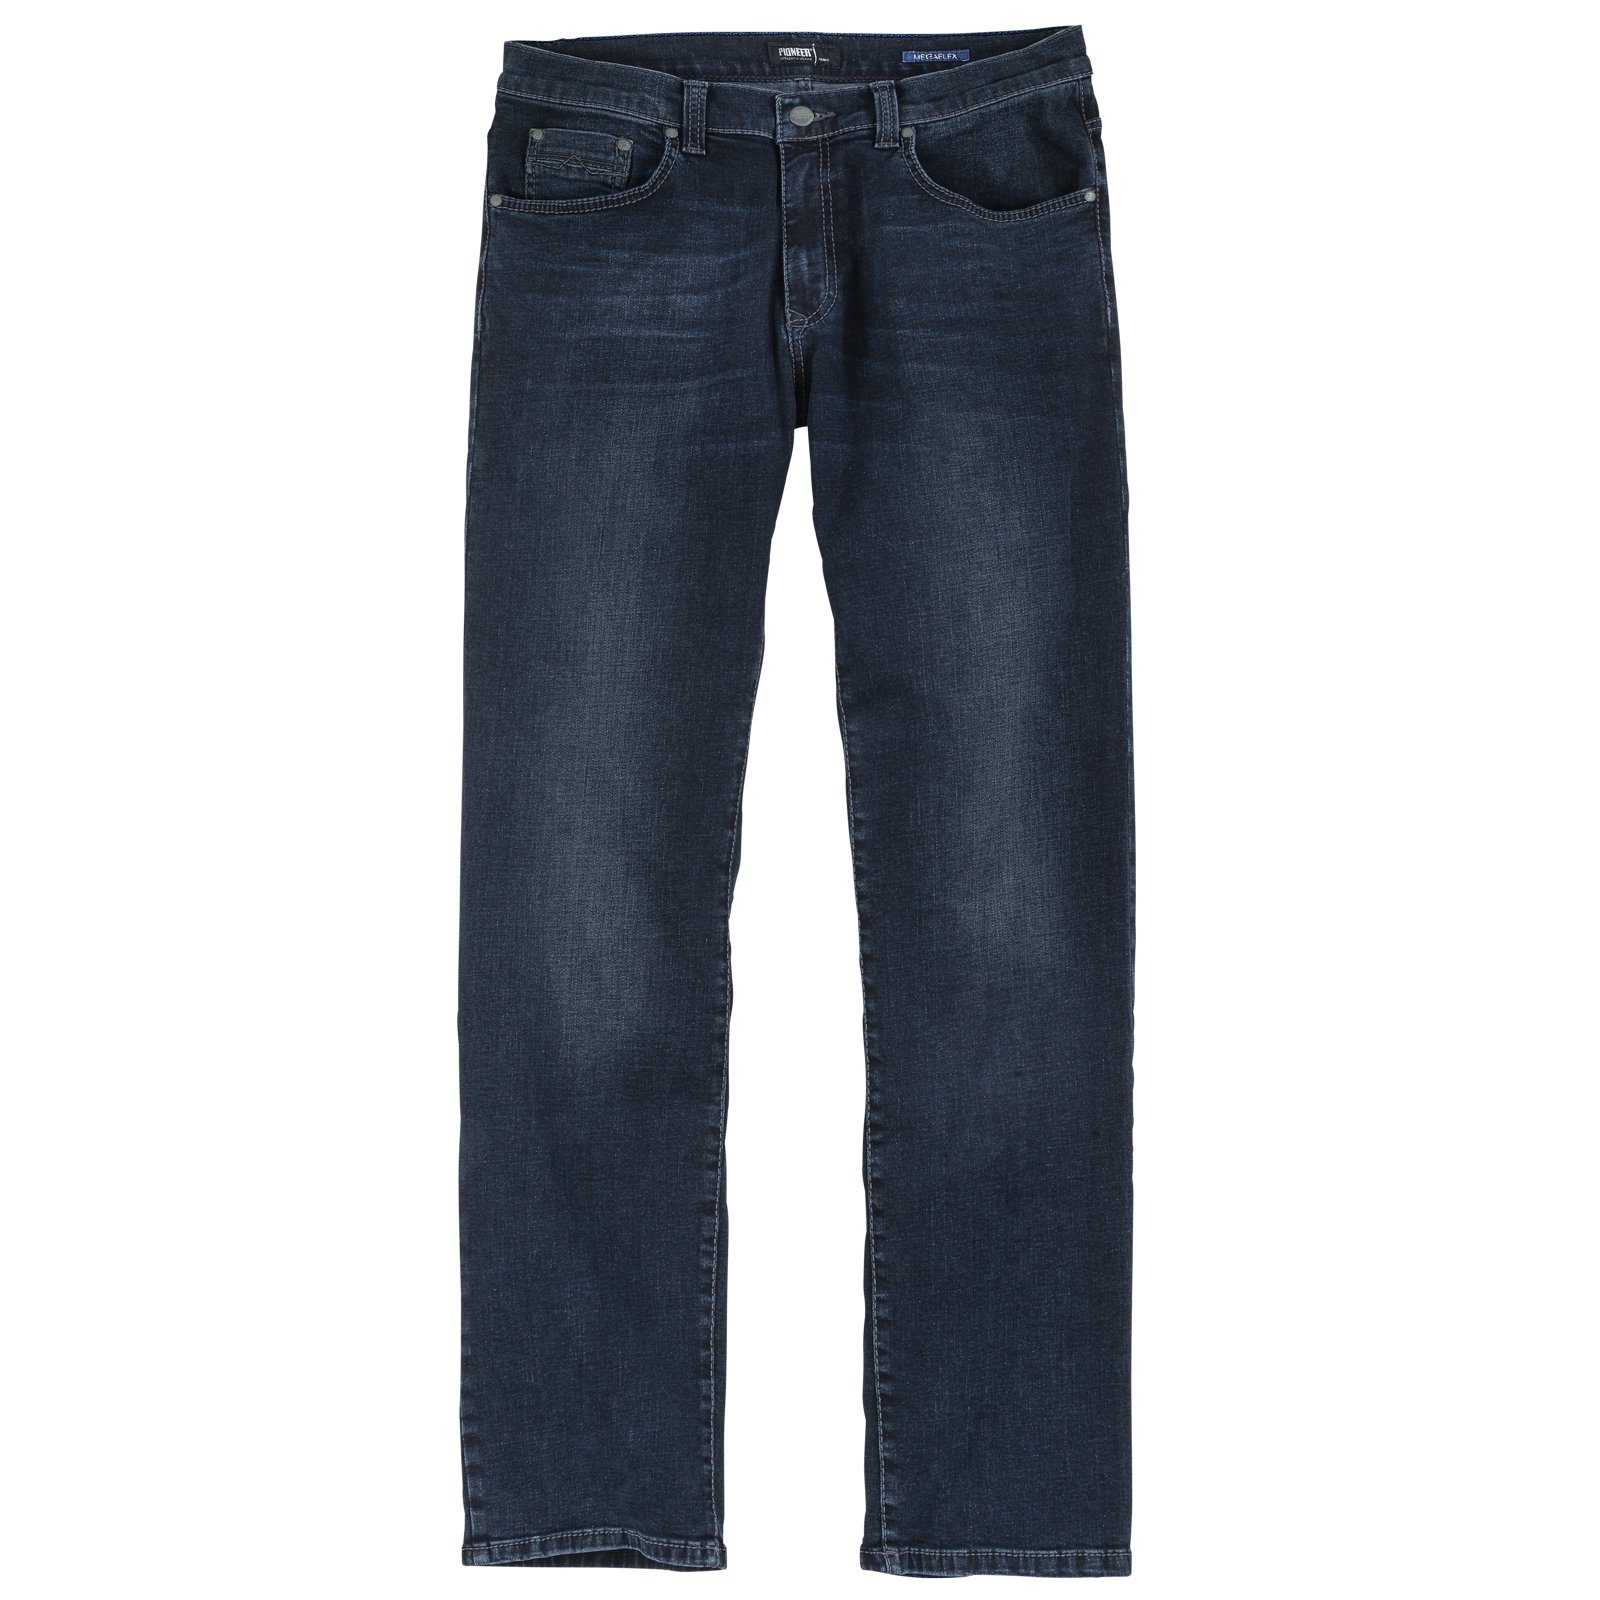 Pionier Bequeme Jeans Große blue/black Größen buffies Rando Pioneer Stretch-Jeans used